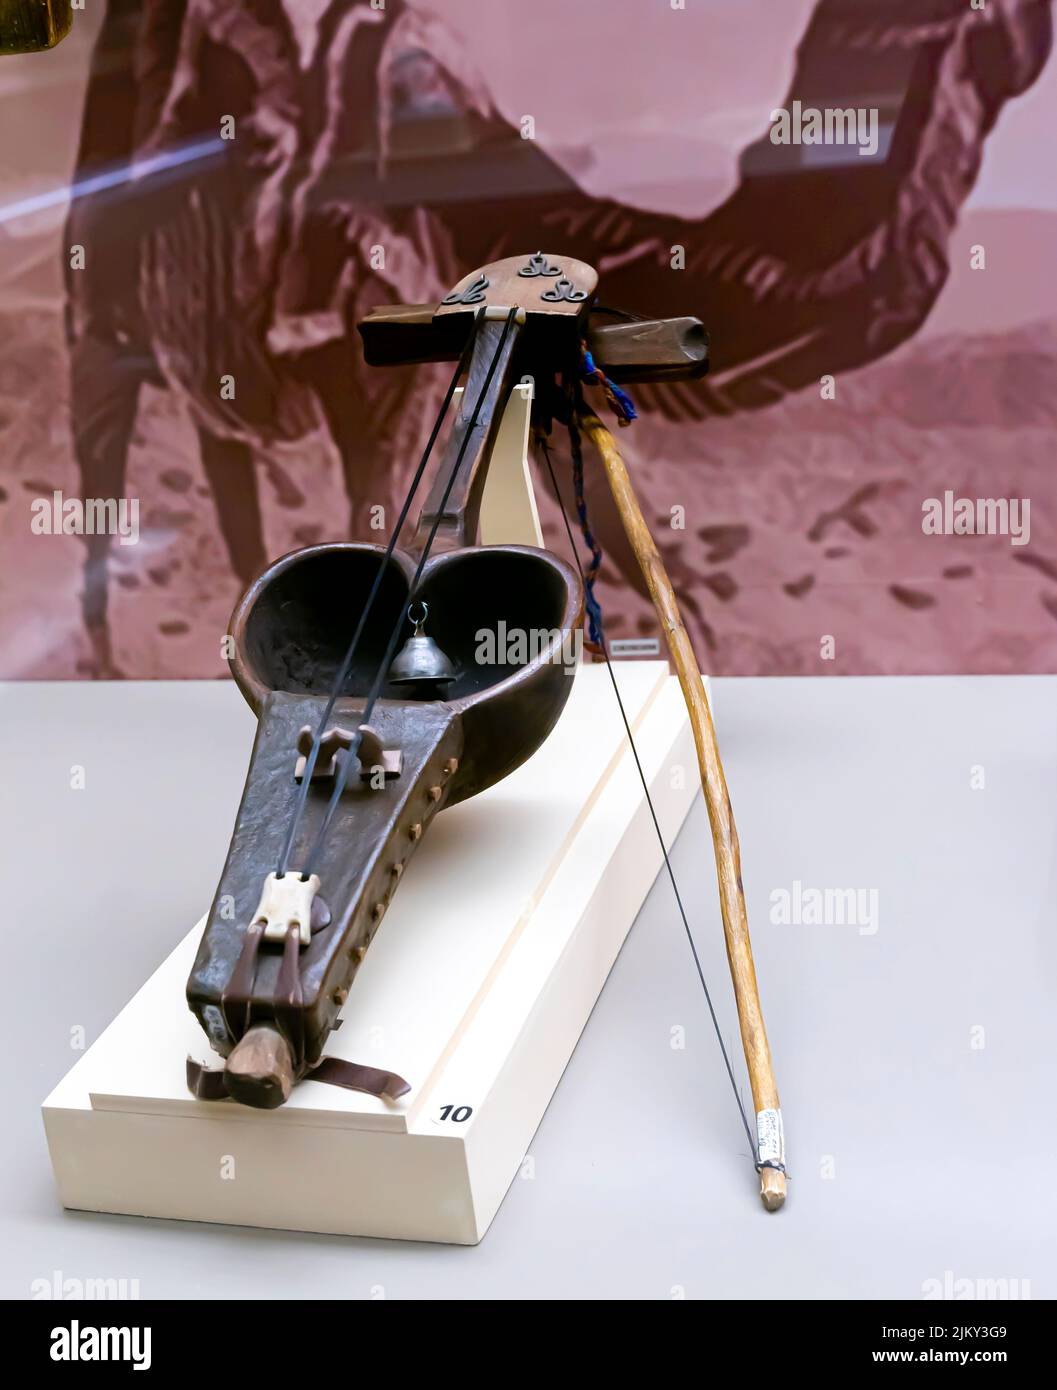 Kyl-kobyz, kilkobiz, kylkobyz, siglo 19th, instrumento turco de cuerda arqueada, extendido entre los kazajos, museo estatal, Nur-Sultan, Kazajstán Foto de stock